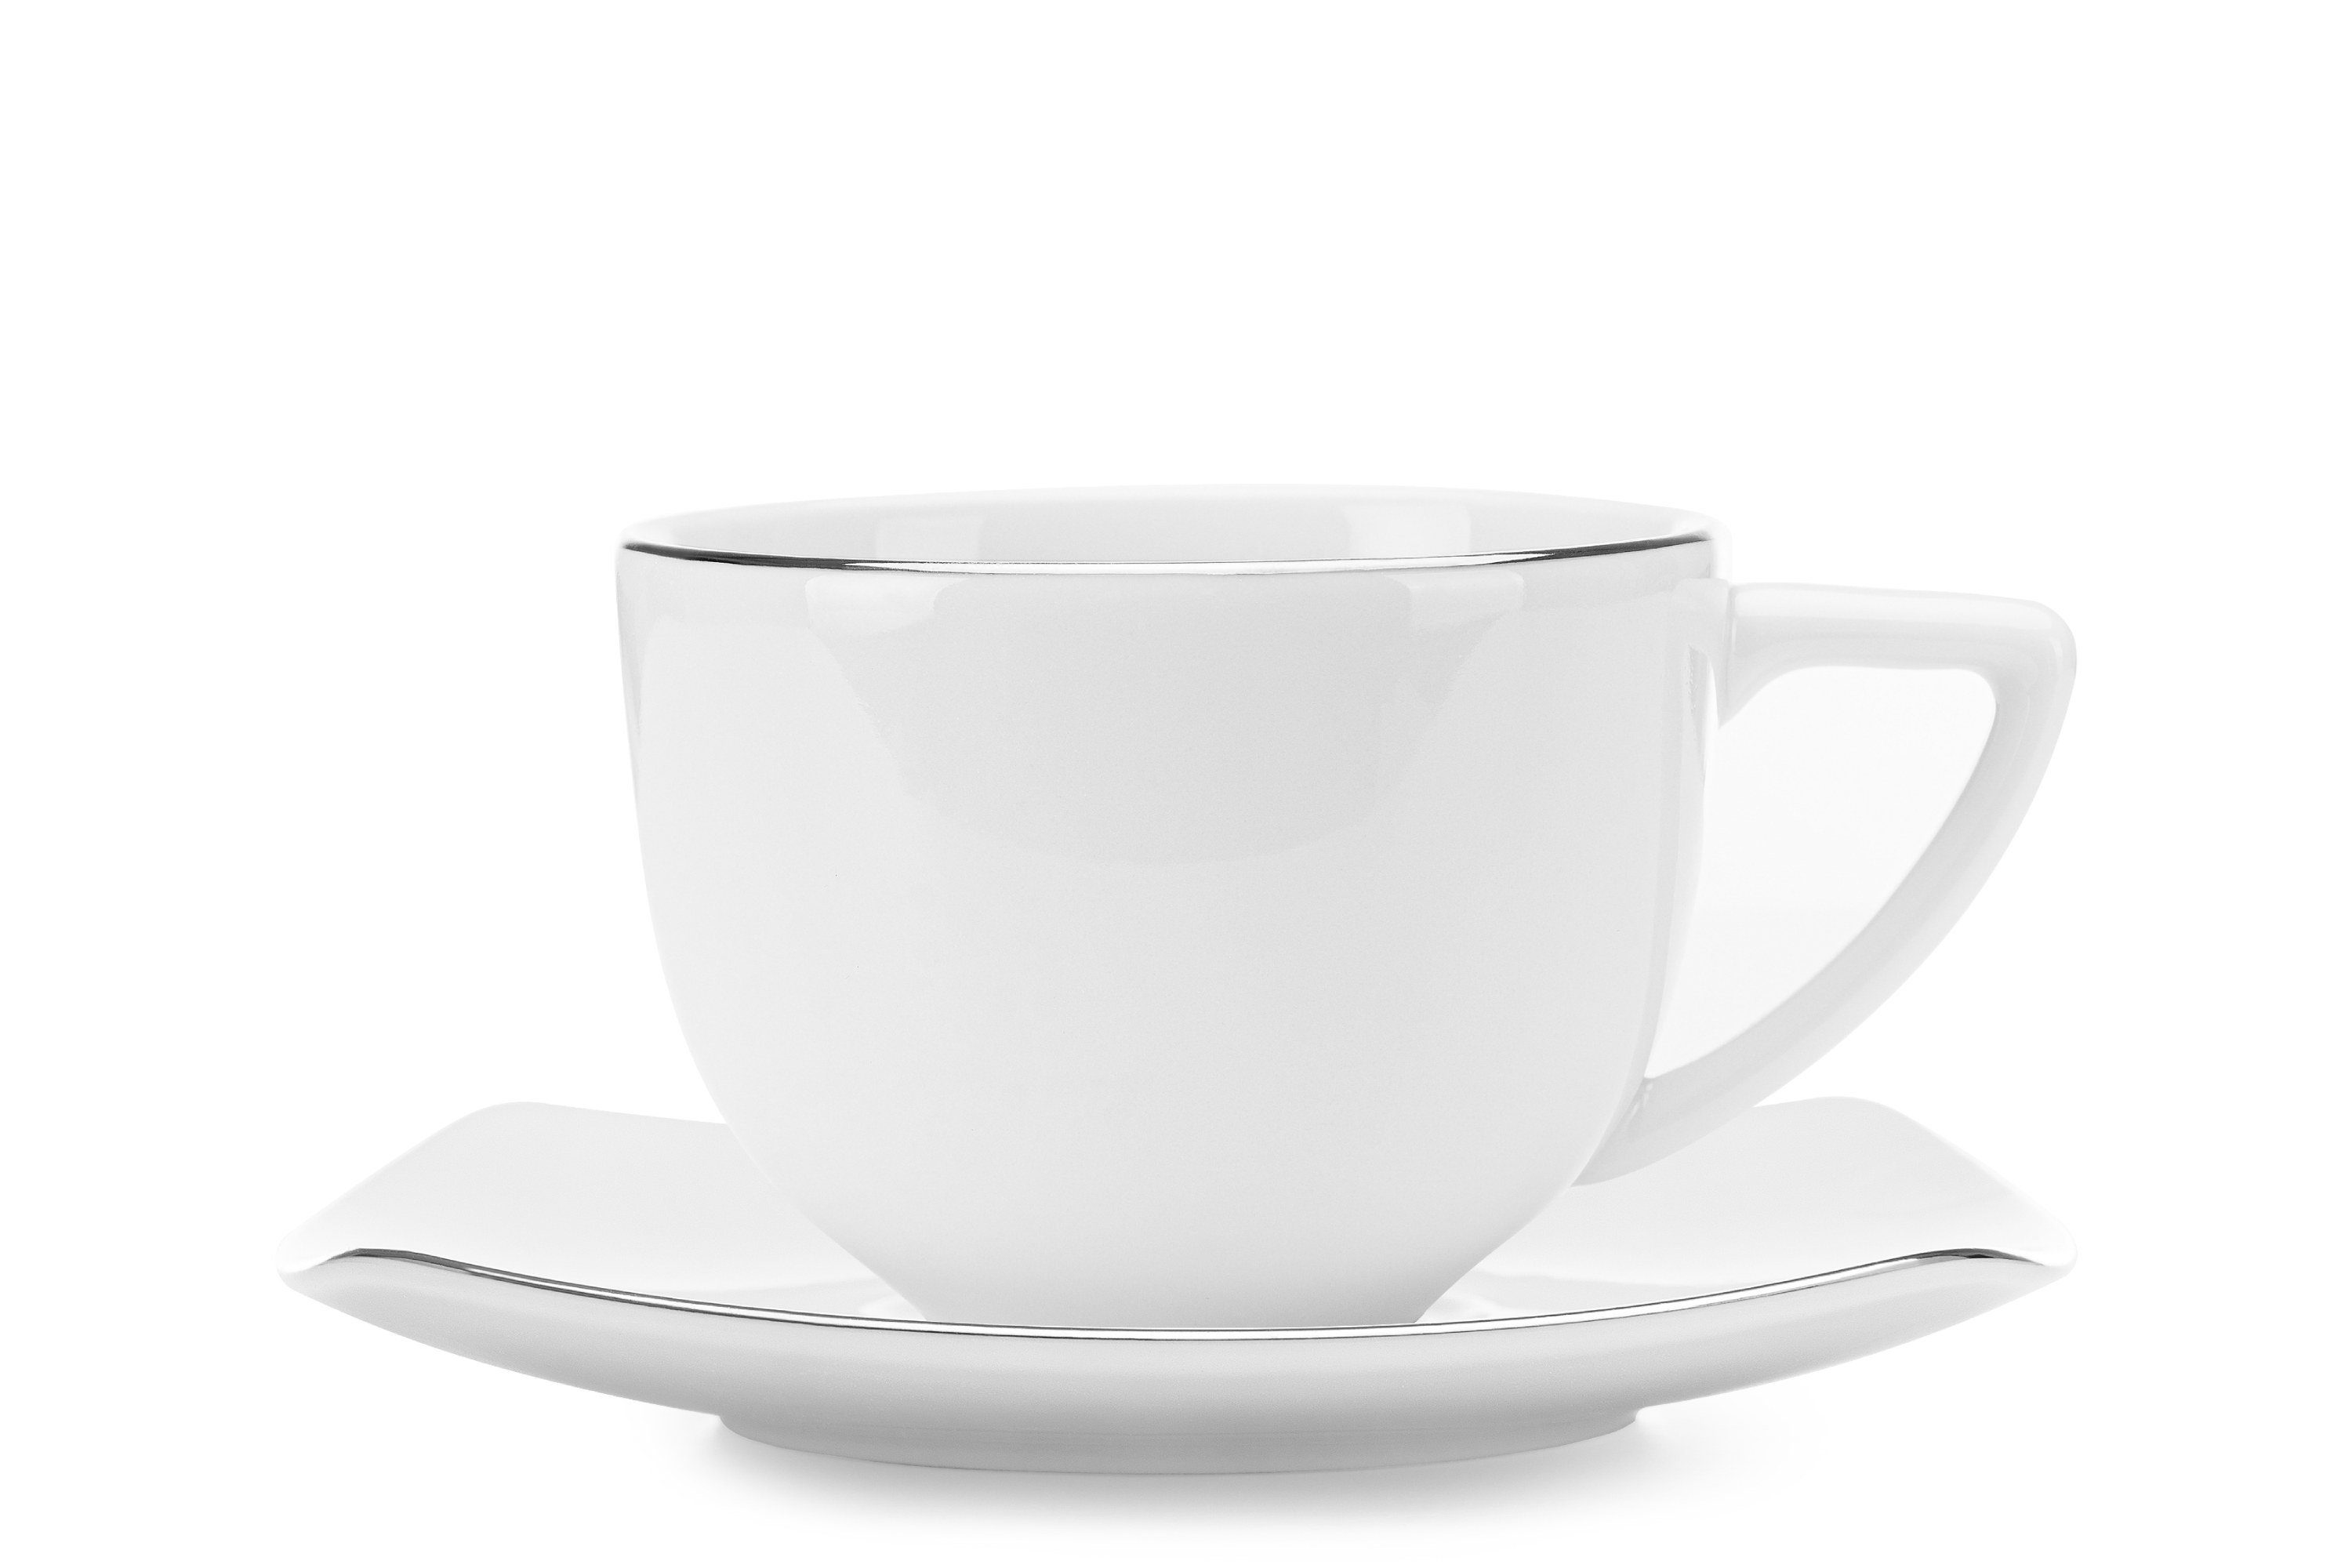 Tafelservice Porzellan, Kaffeeservice Personen, Platin CARLINA Elegant Kombiservice Konsimo quadratisch, Handwäsche, (30-tlg), 6